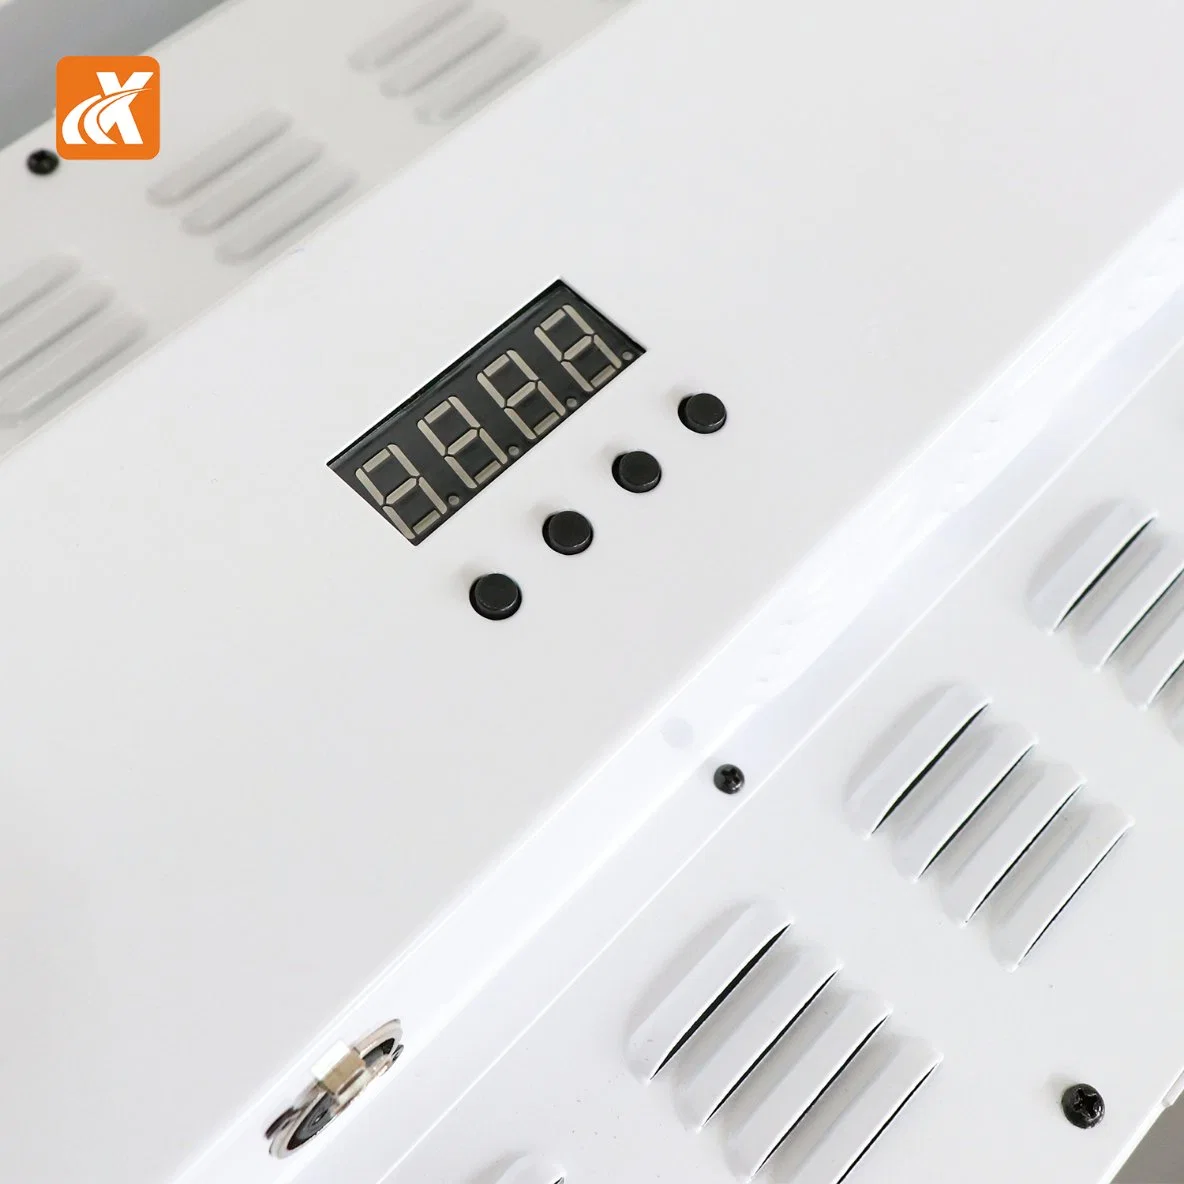 D100 المصنع إمداد CE الجودة 200W أبيض و أبيض دافئ مصباح كهربائي قابل للطي لوحة LED المرحلة اجتماع الضوء استوديو مصباح الغرفة